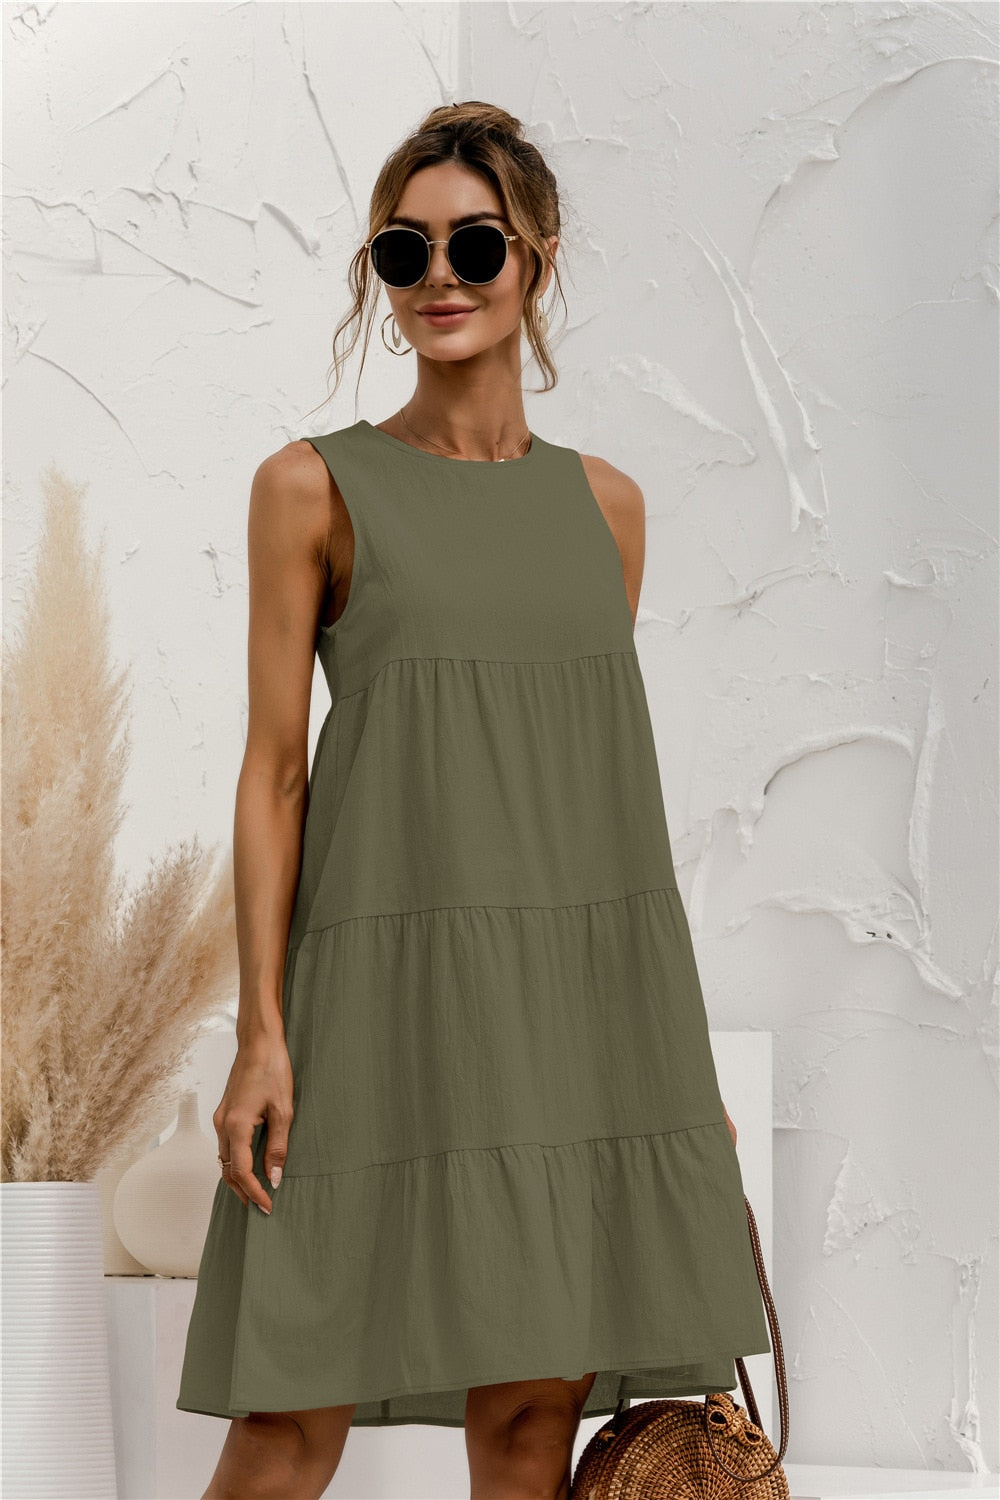 2021 Summer Women Vest Dress Cotton O-Neck Sleeveless Solid Midi Dress Stitching Large Swing Casual Loose Dress Vestido Sundress